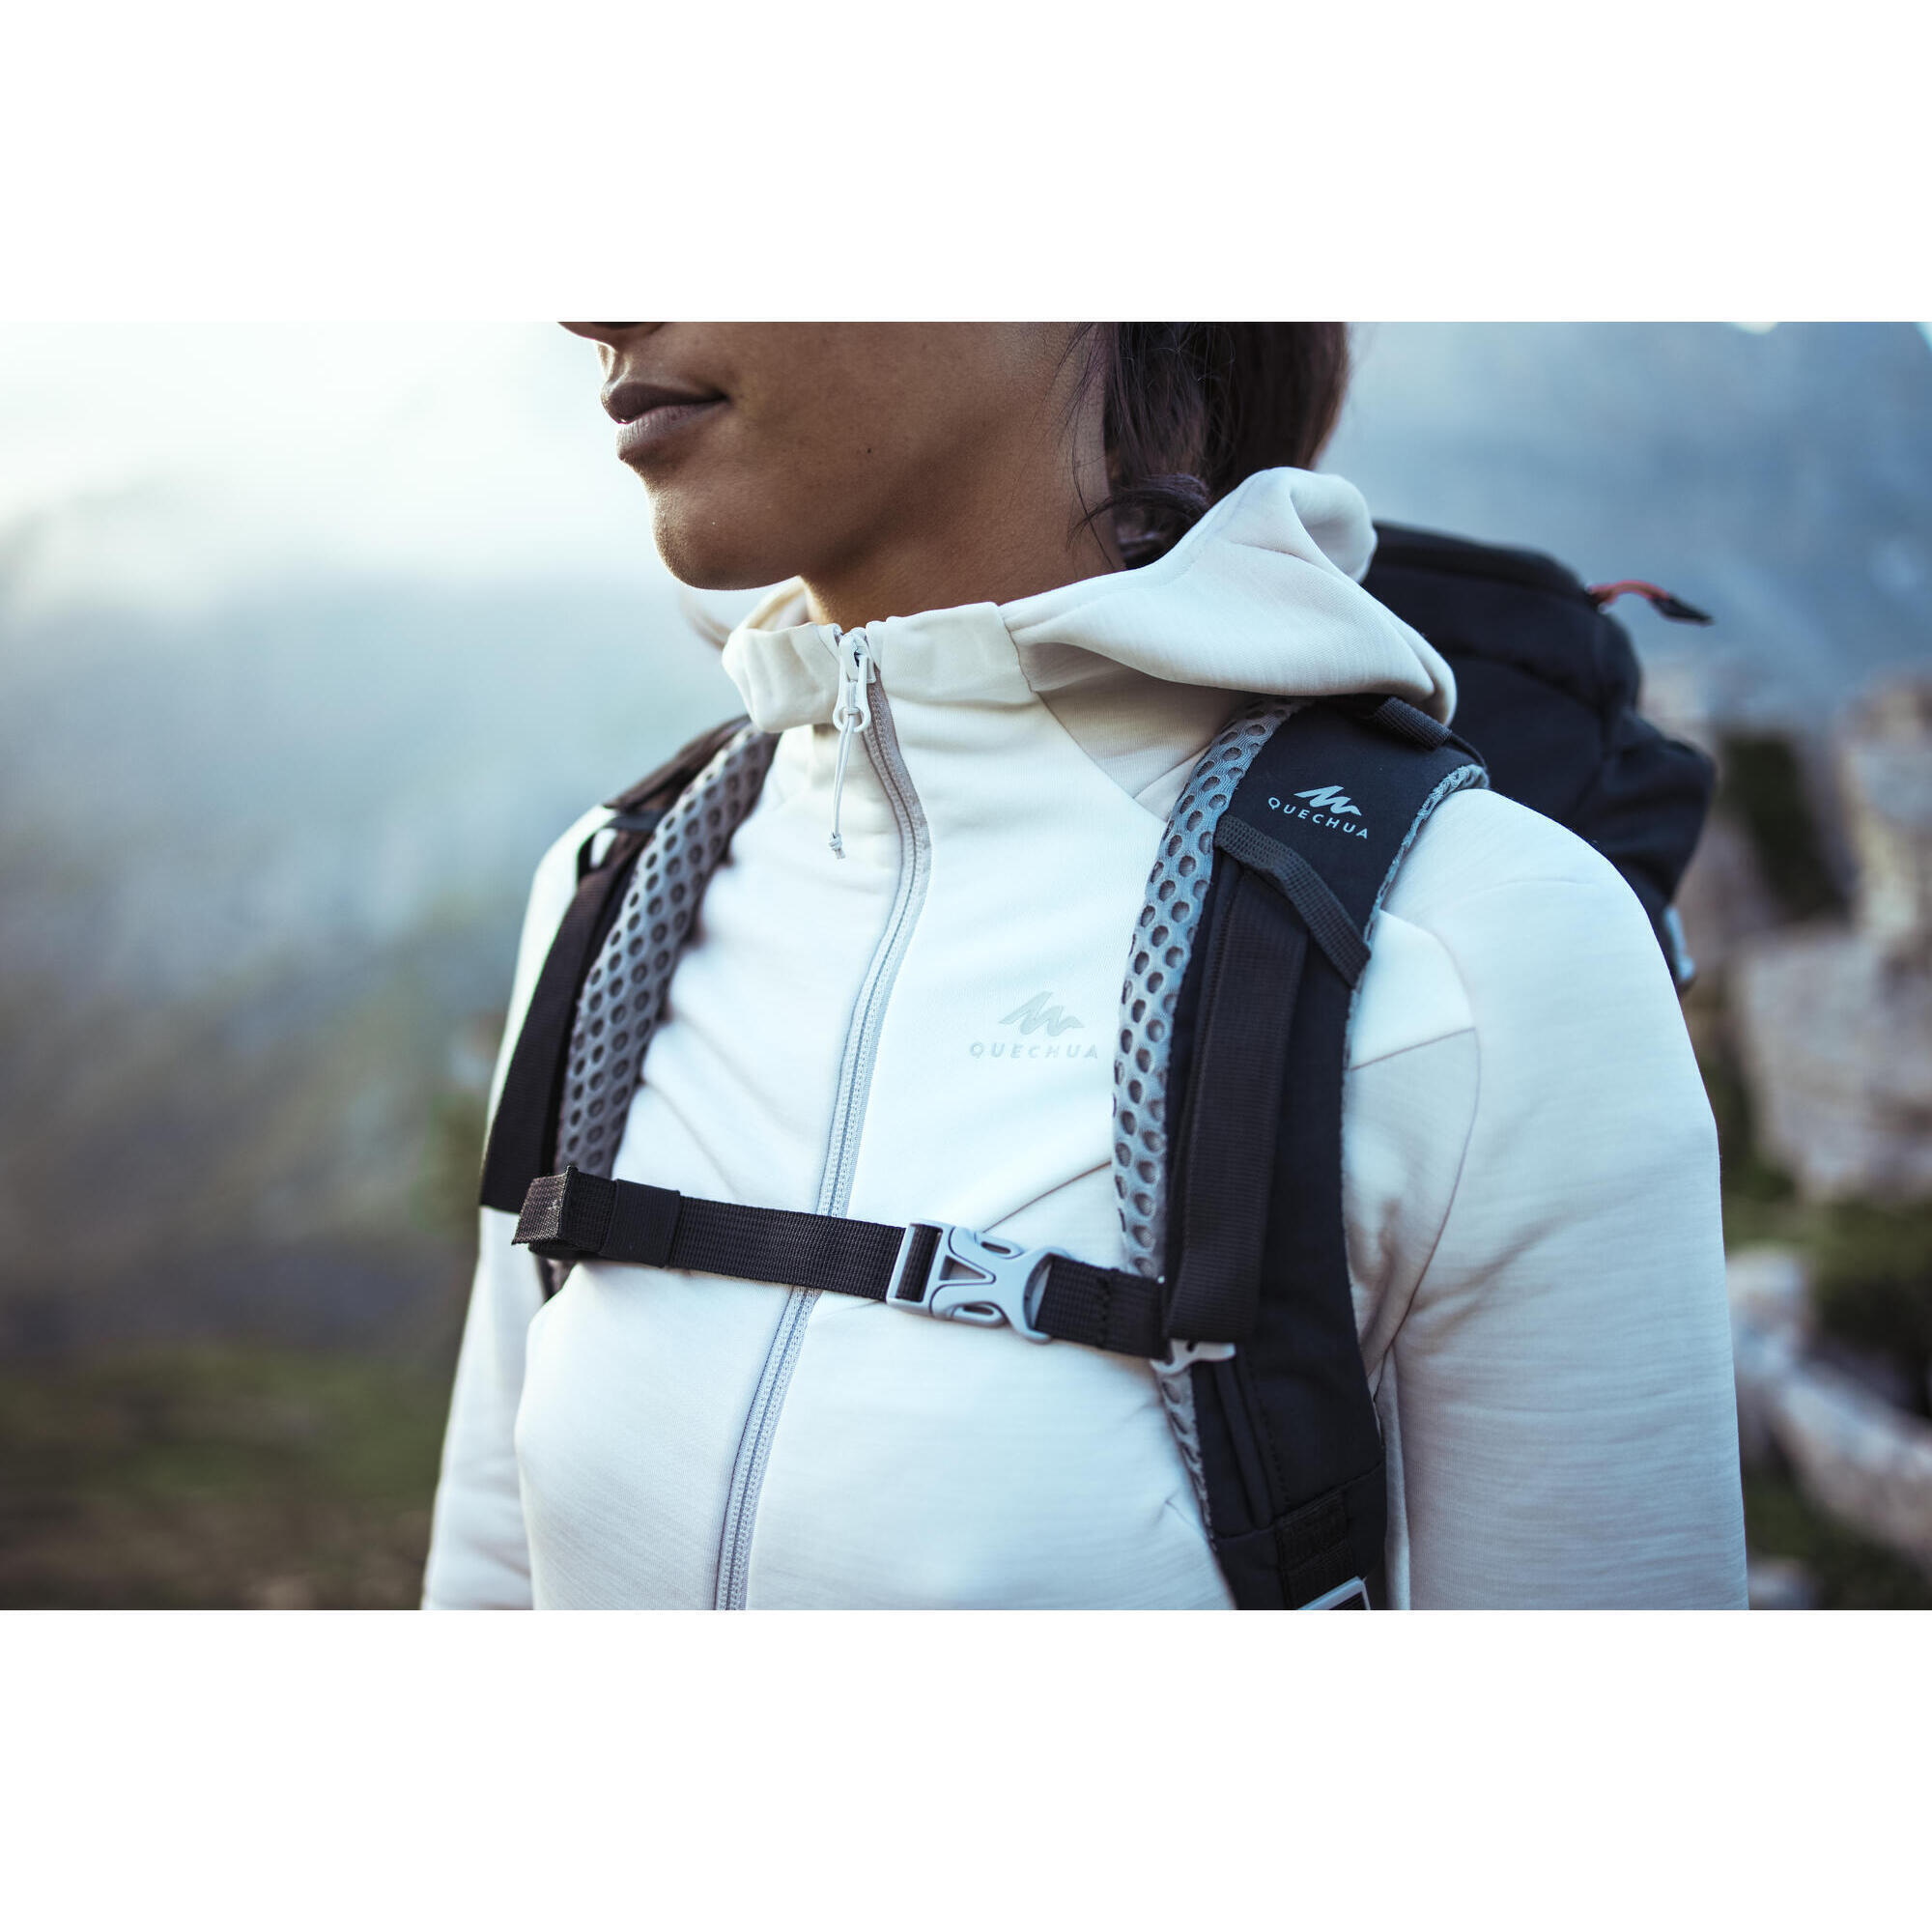 Refurbished Womens Hiking Thin Fleece Jacket - MH520 - A Grade 7/7